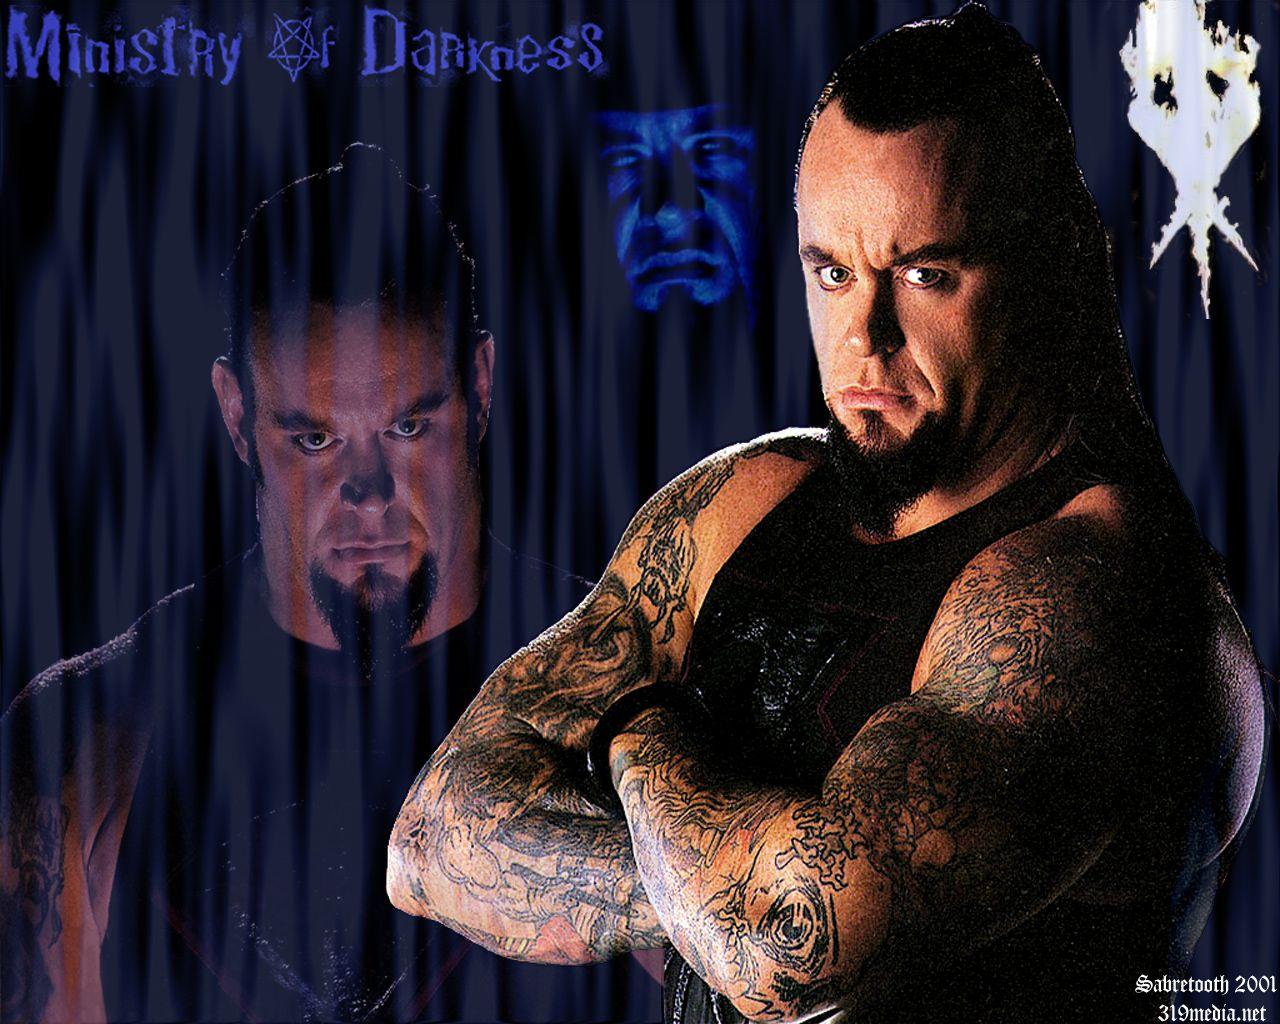 Ministry of Darkness Undertaker Wallpaper